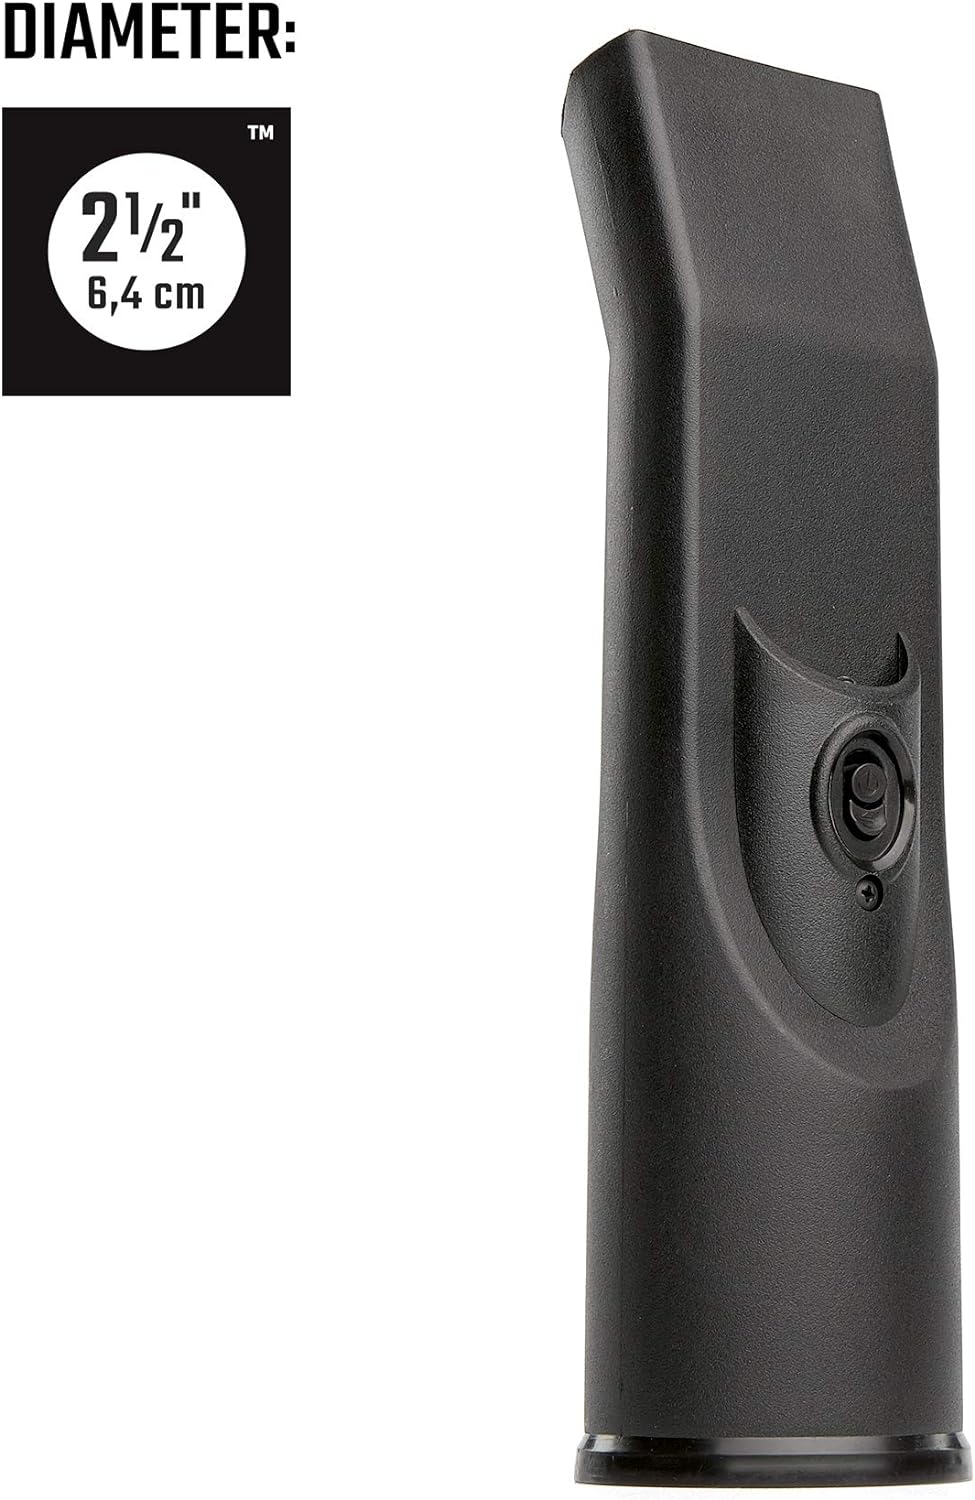 CRAFTSMAN CMXZVBE38337 2-1/2 in. LED Lighted Car Nozzle Wet/Dry Shop Vacuum Attachment, Black